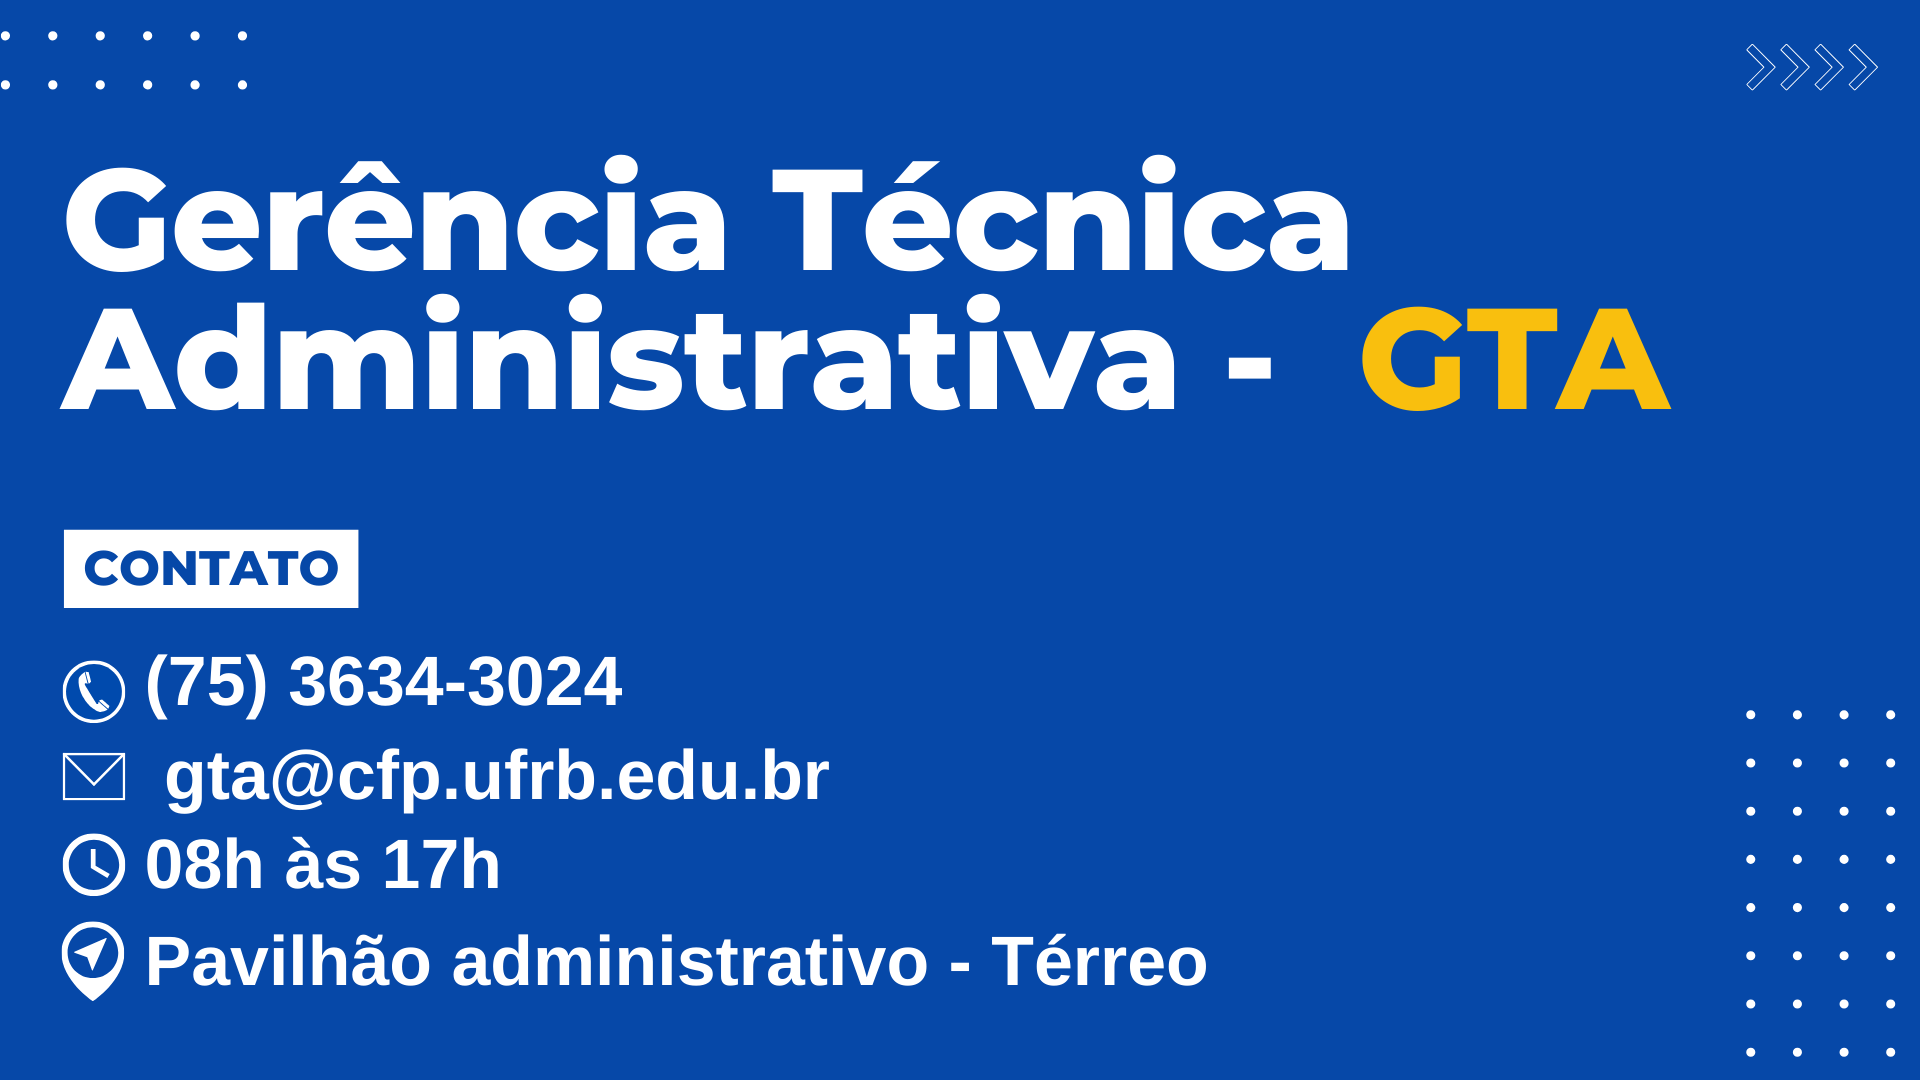 Gerência Técnica Administrativa -  GTA